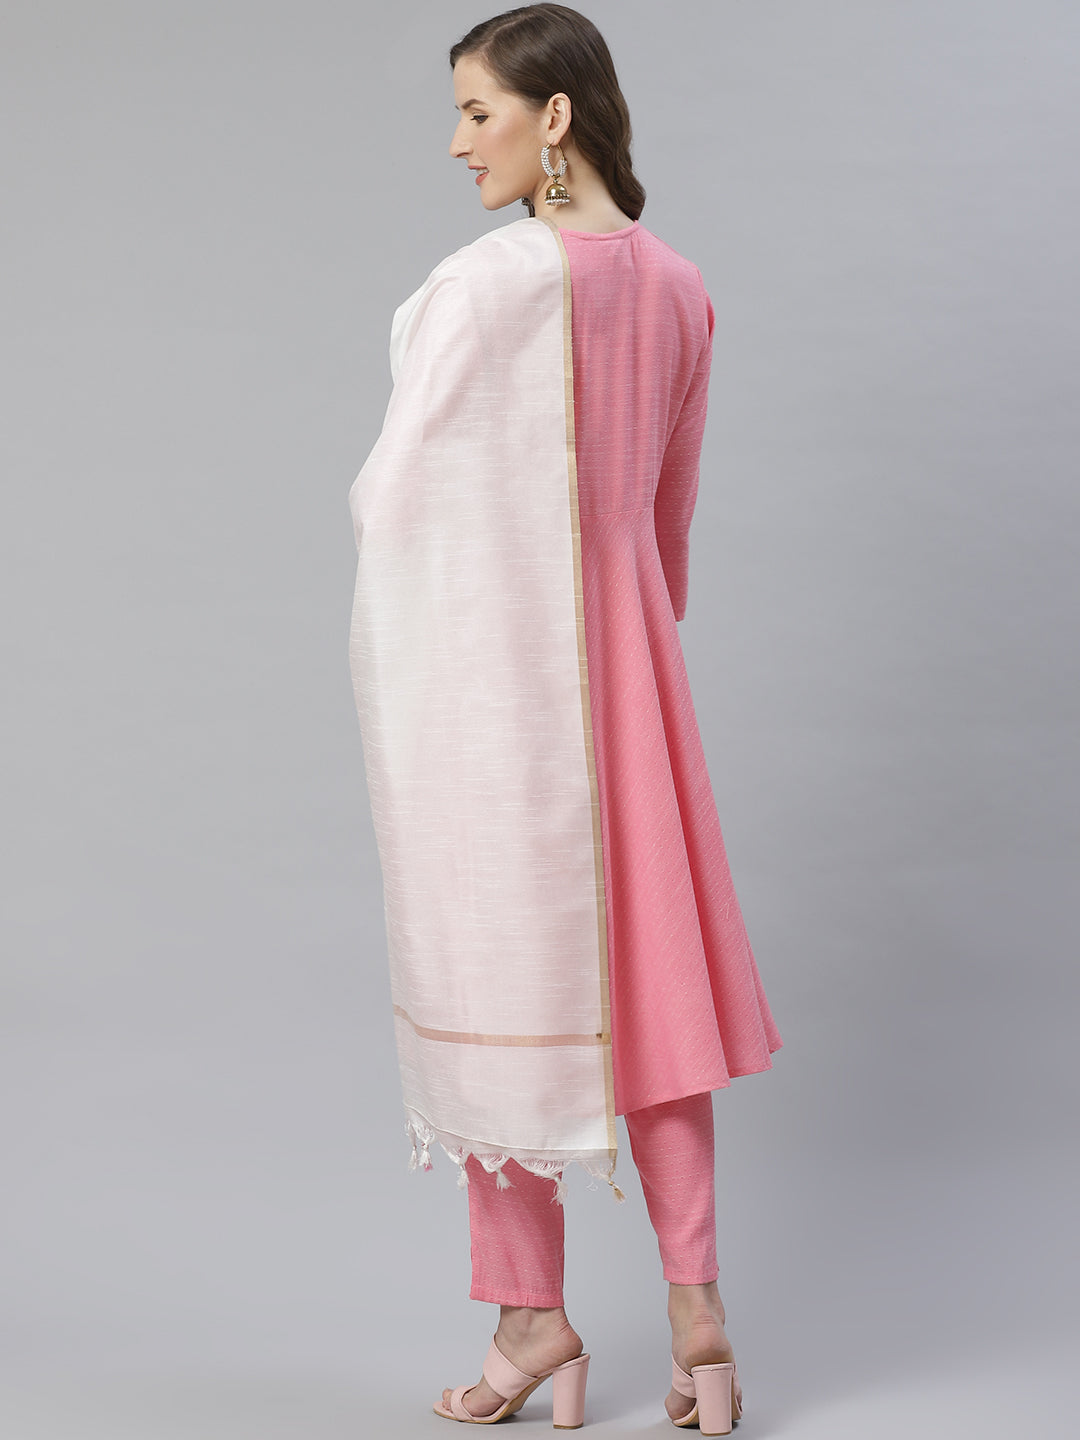 Jompers Women Pink & White Self Design Kurta with Trousers & Dupatta